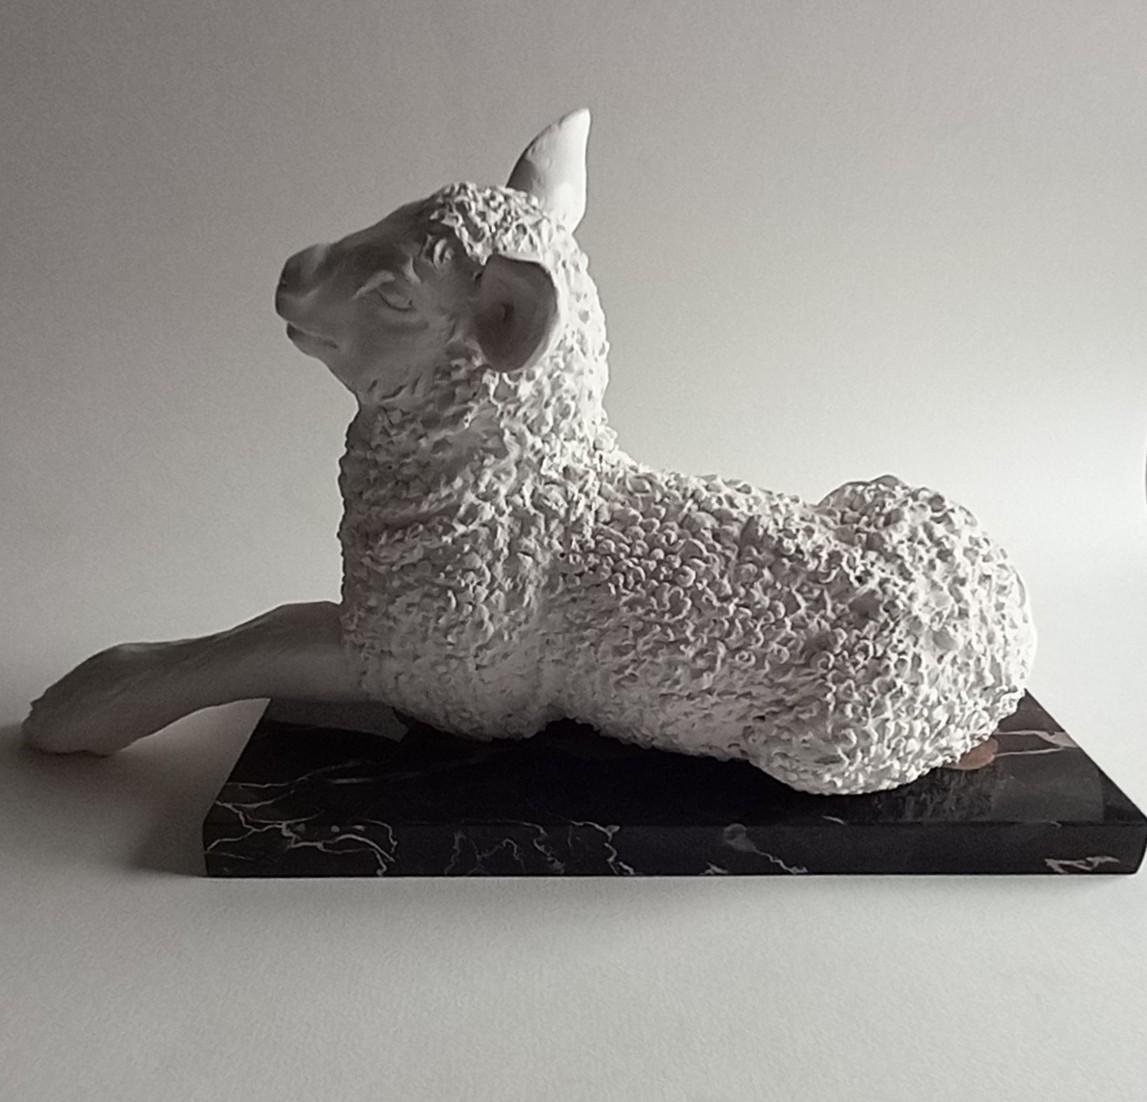 Lamb - Sculpture by Barry Davies